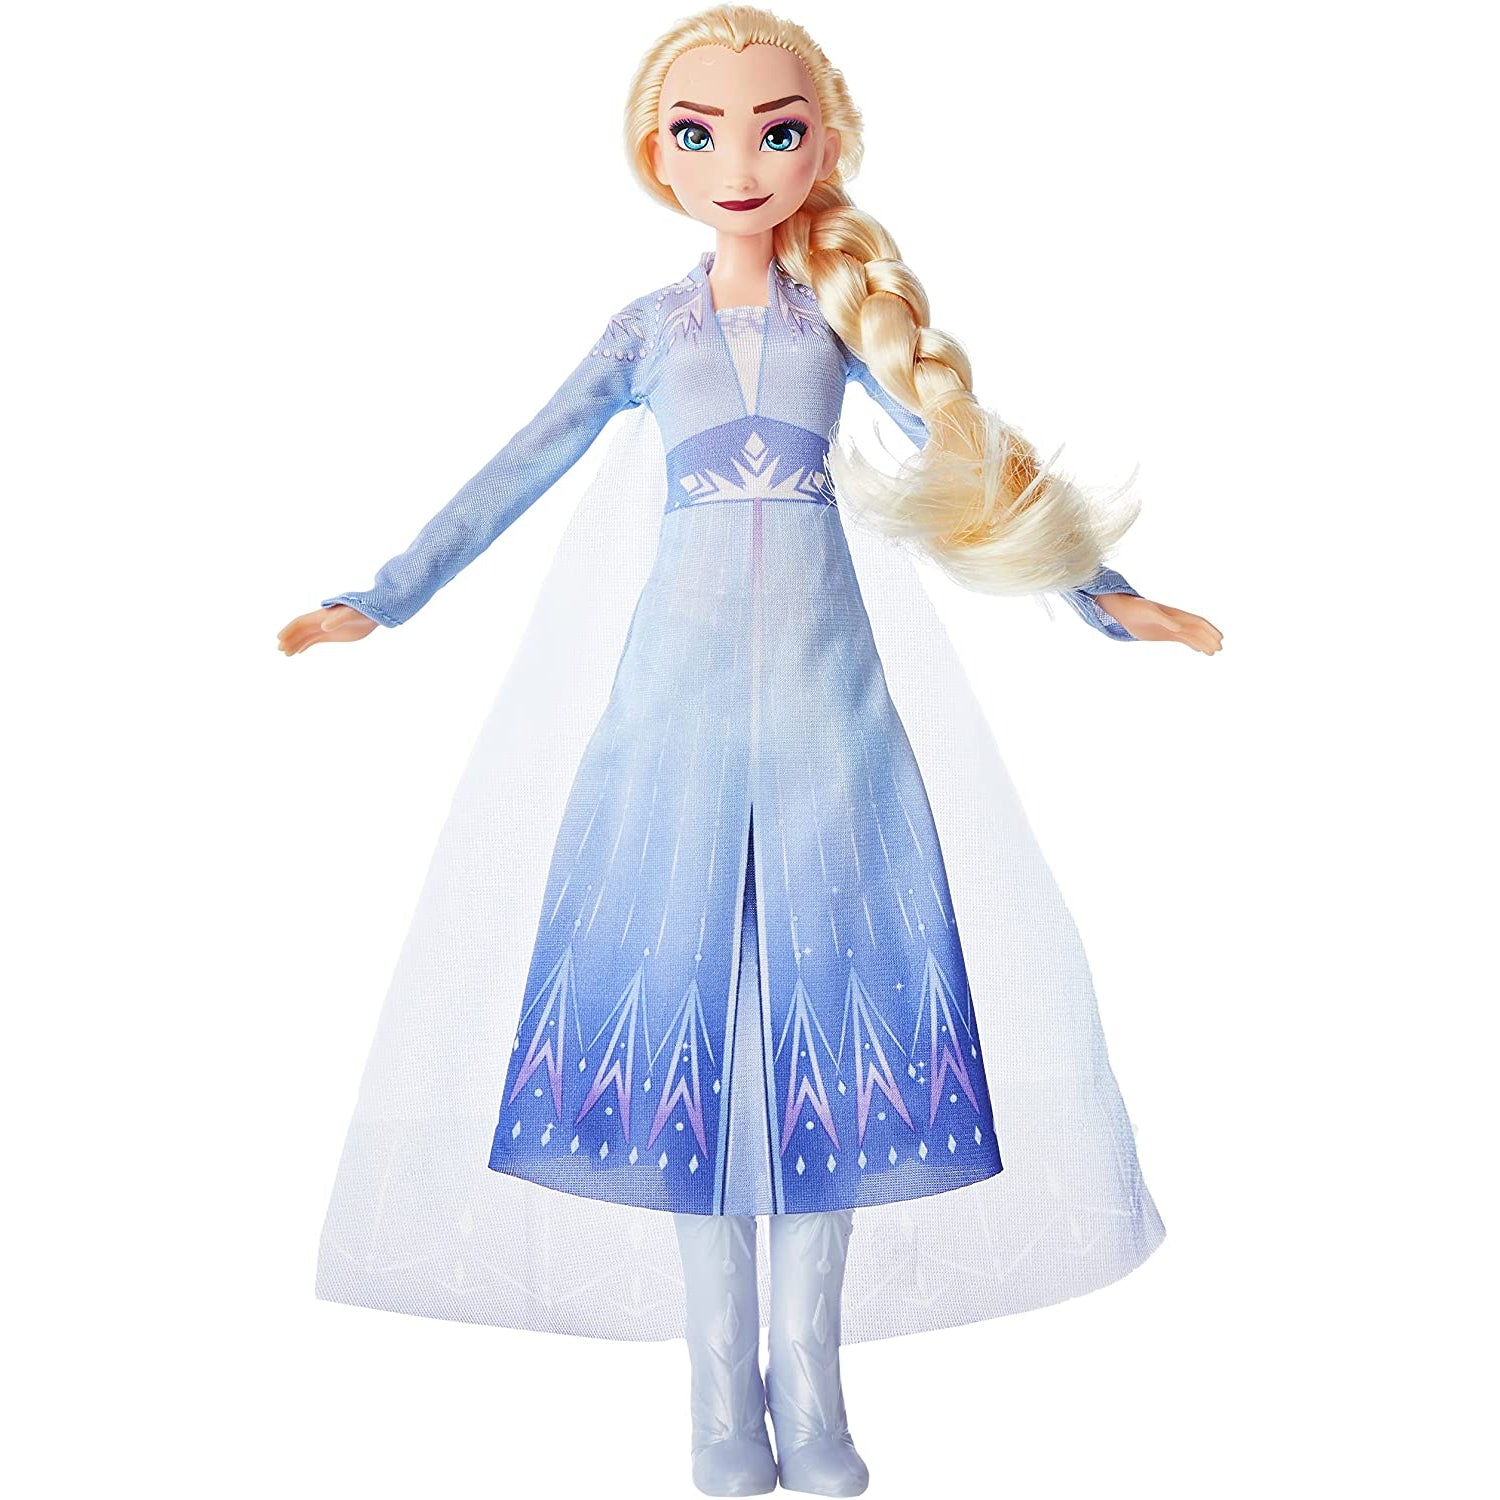 Disney Frozen Elsa Fashion Doll With Pabbie and Salamandra